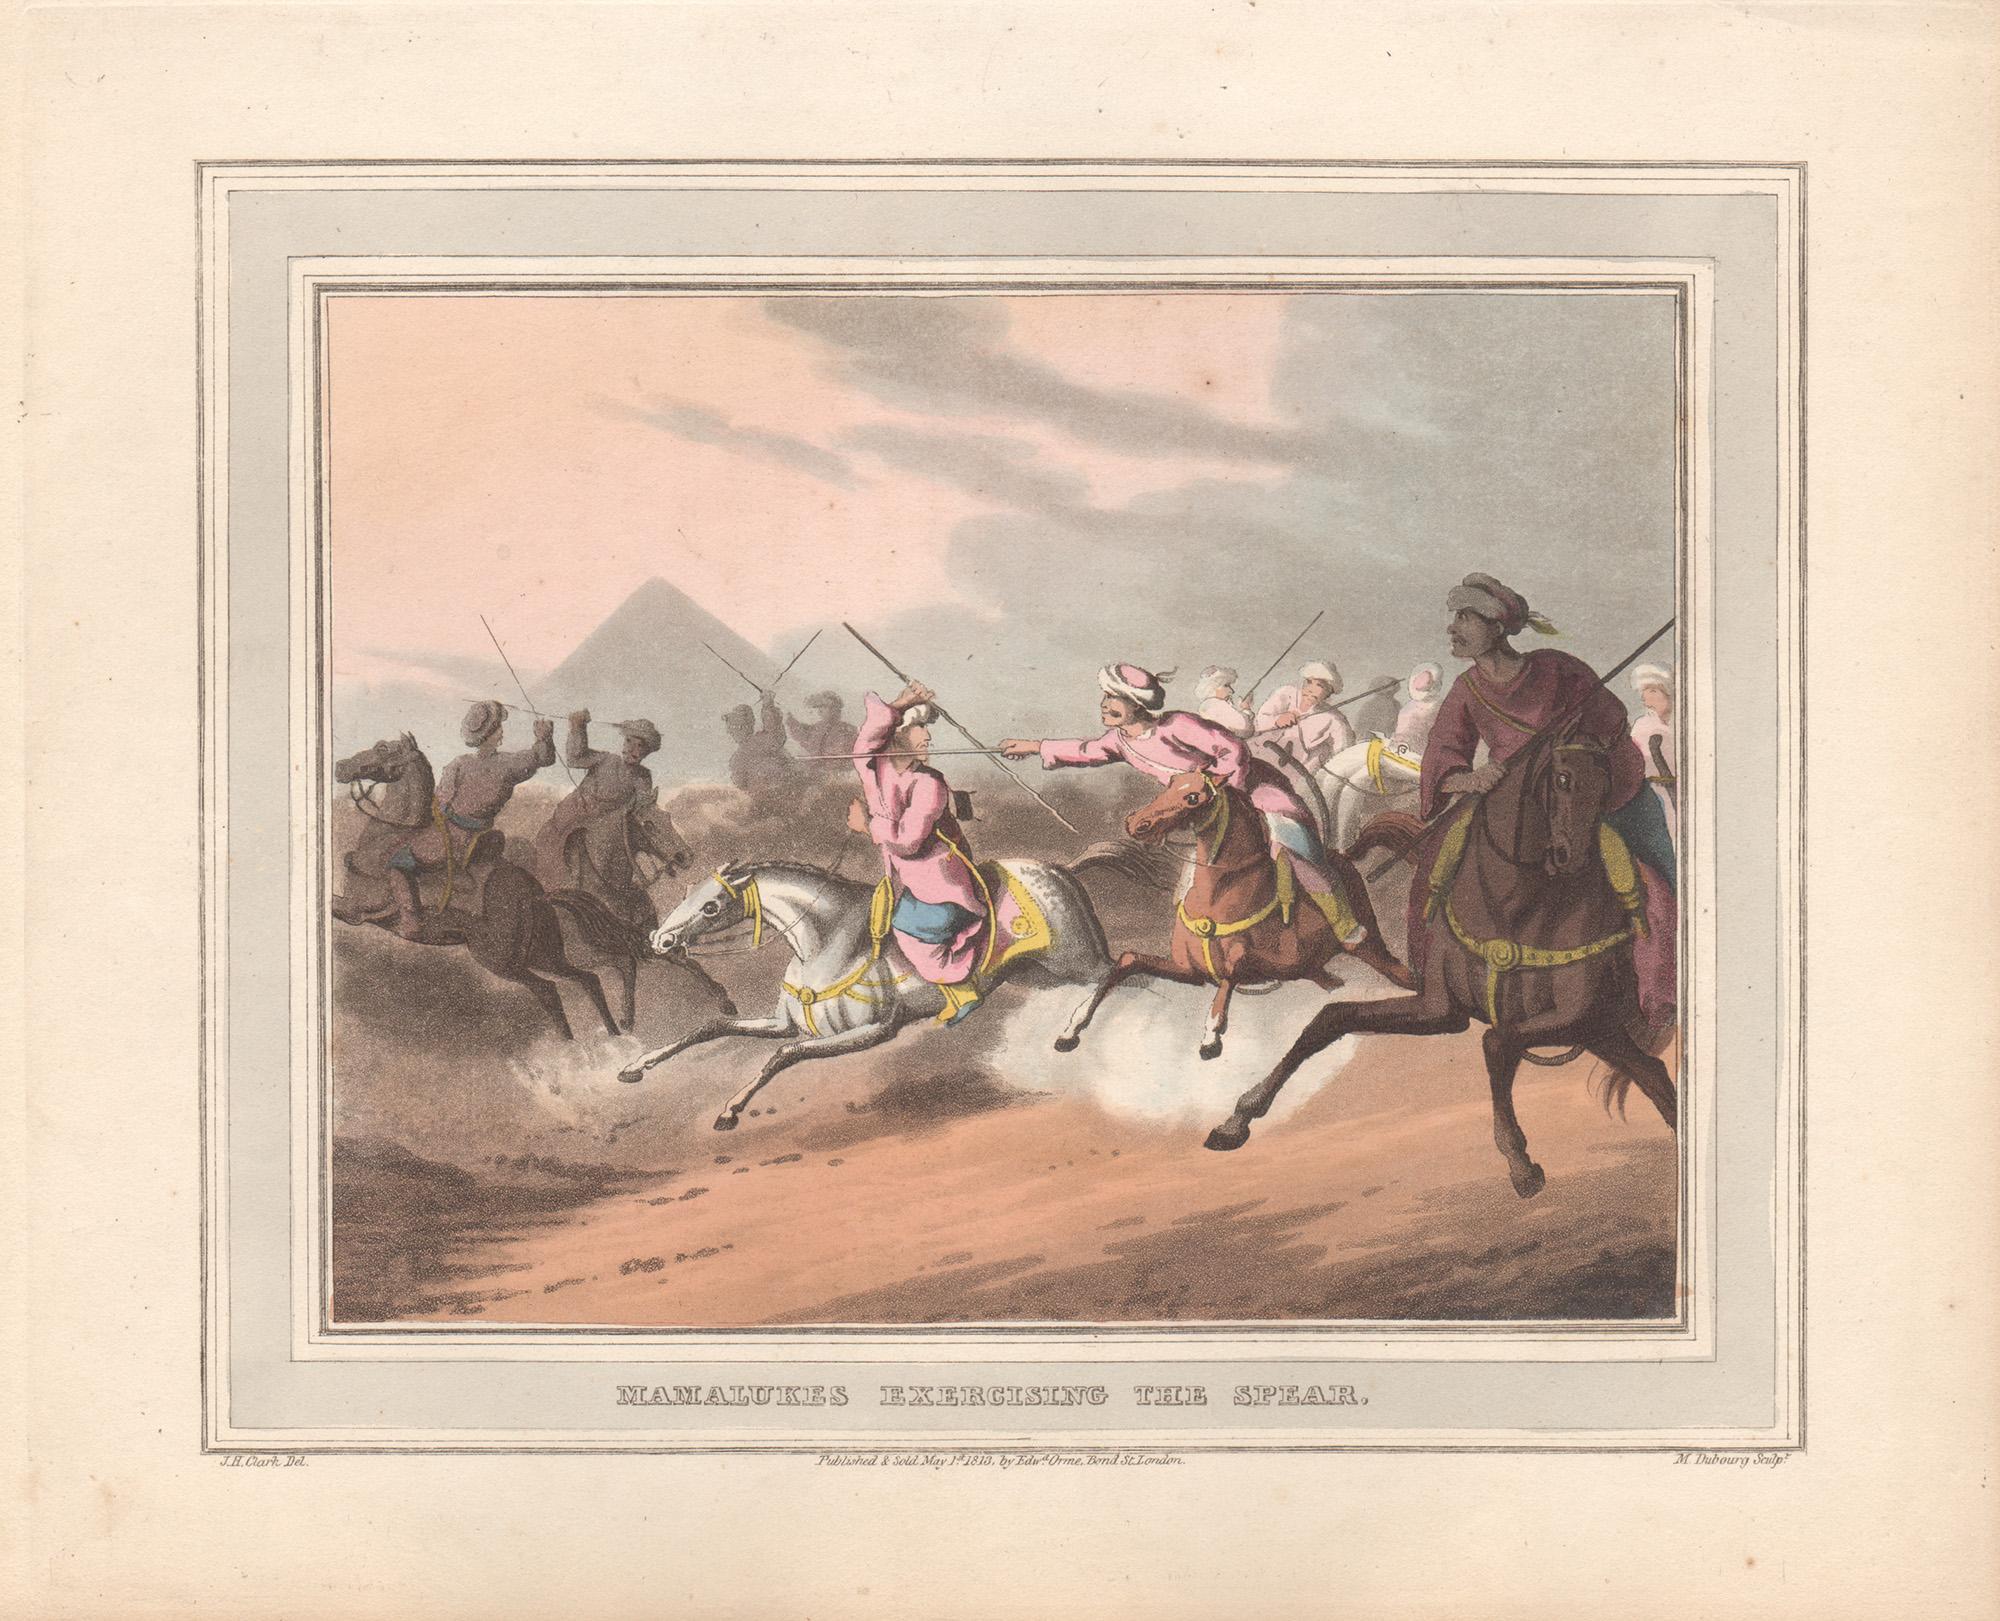 Samuel Howitt Print - Mamalukes Exercising the Spear, aquatint engraving hunting print, 1813